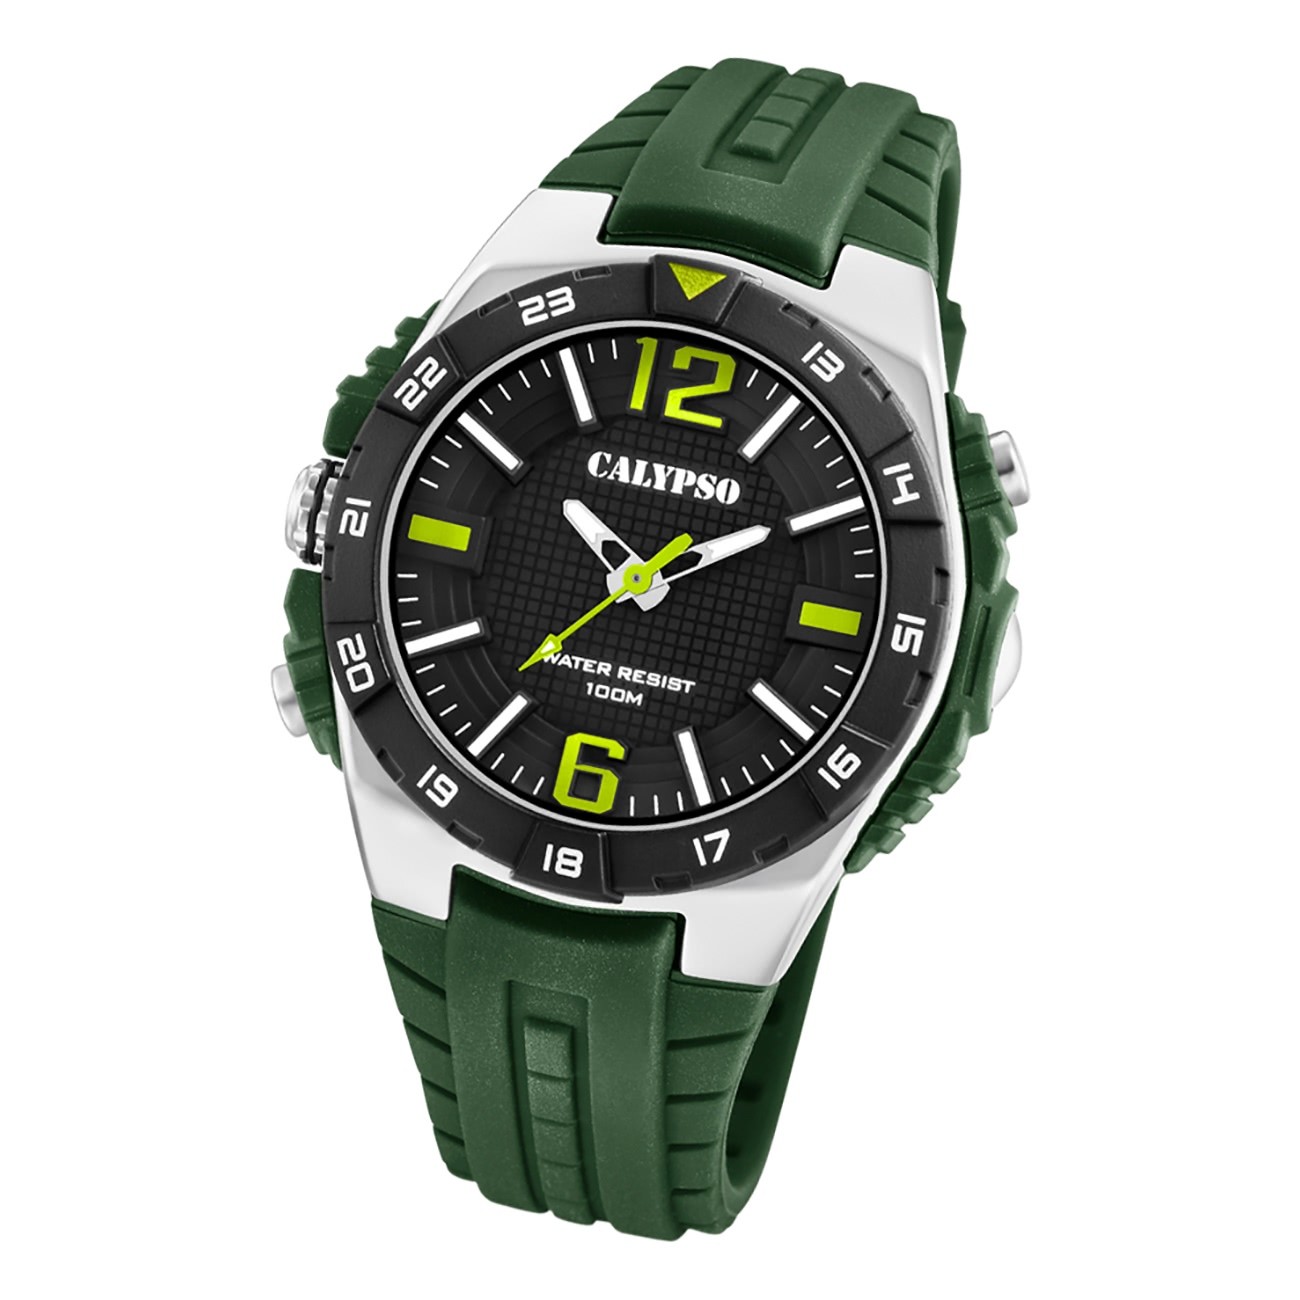 Calypso Herren Jugend Armbanduhr Outdoor K5778/2 Analog Kunststoff grün UK5778/2